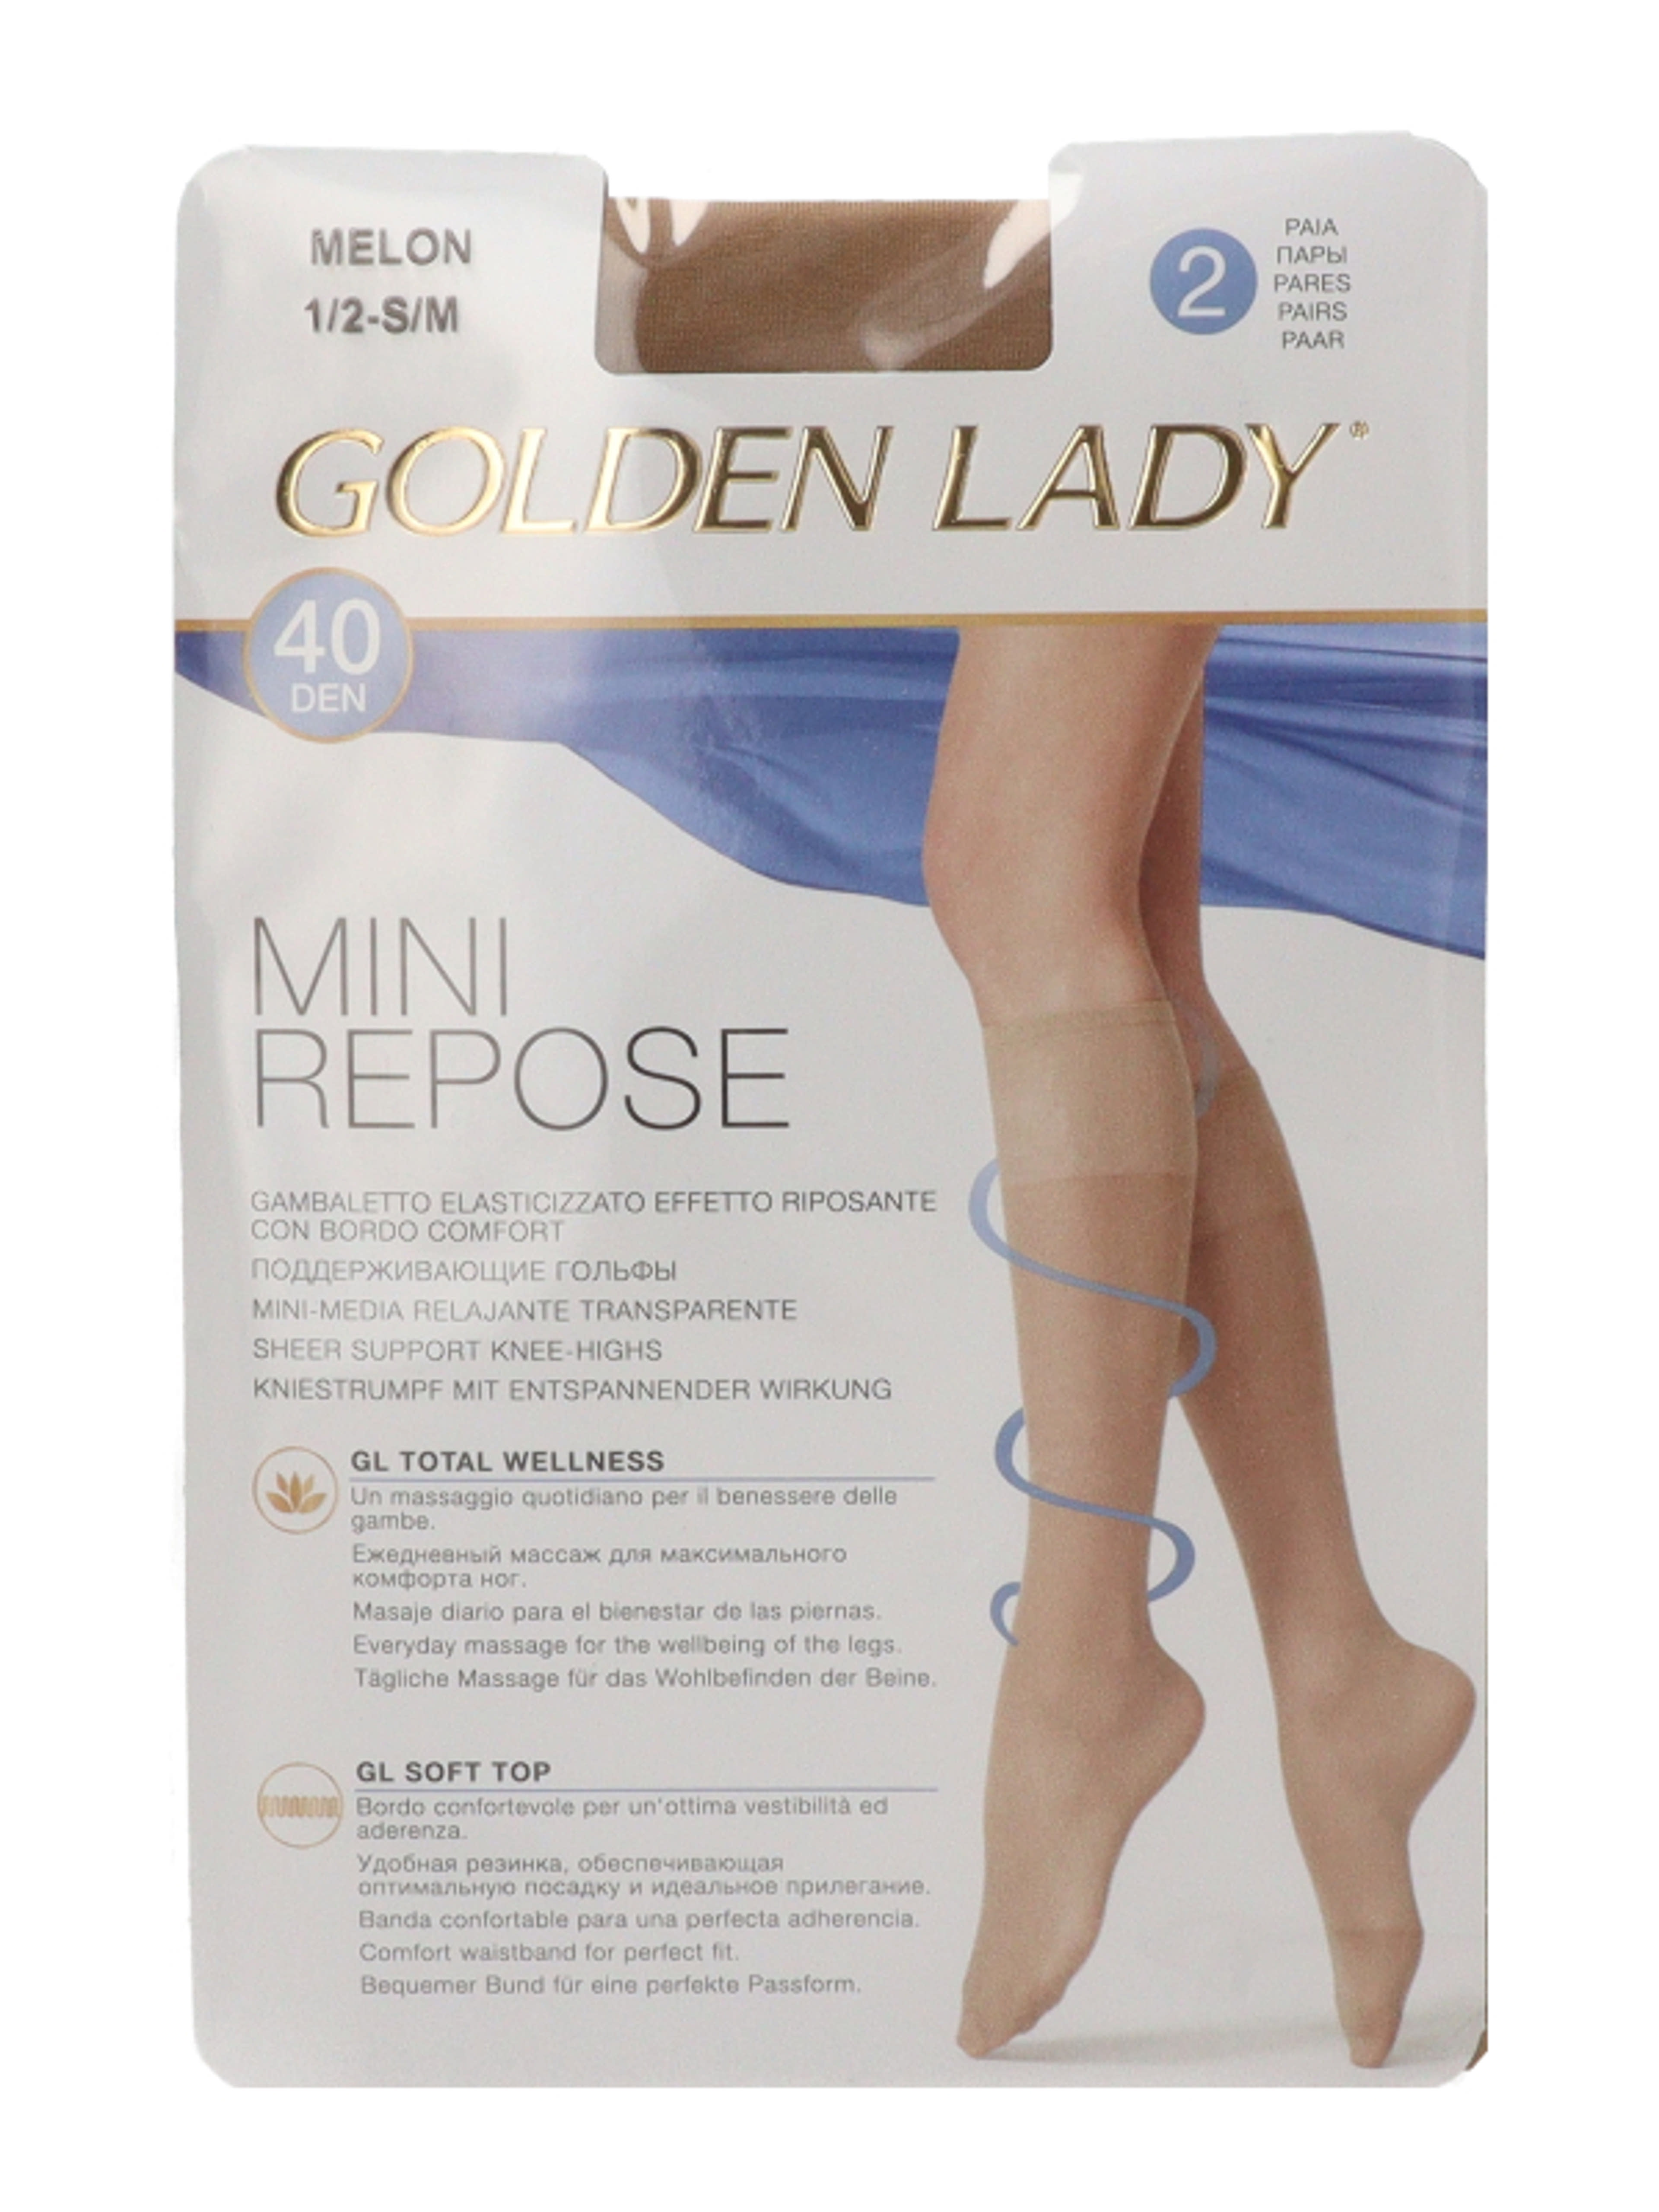 Golden Lady Mini Repose térdfix 40 Den S/M Melon - 2 db-1